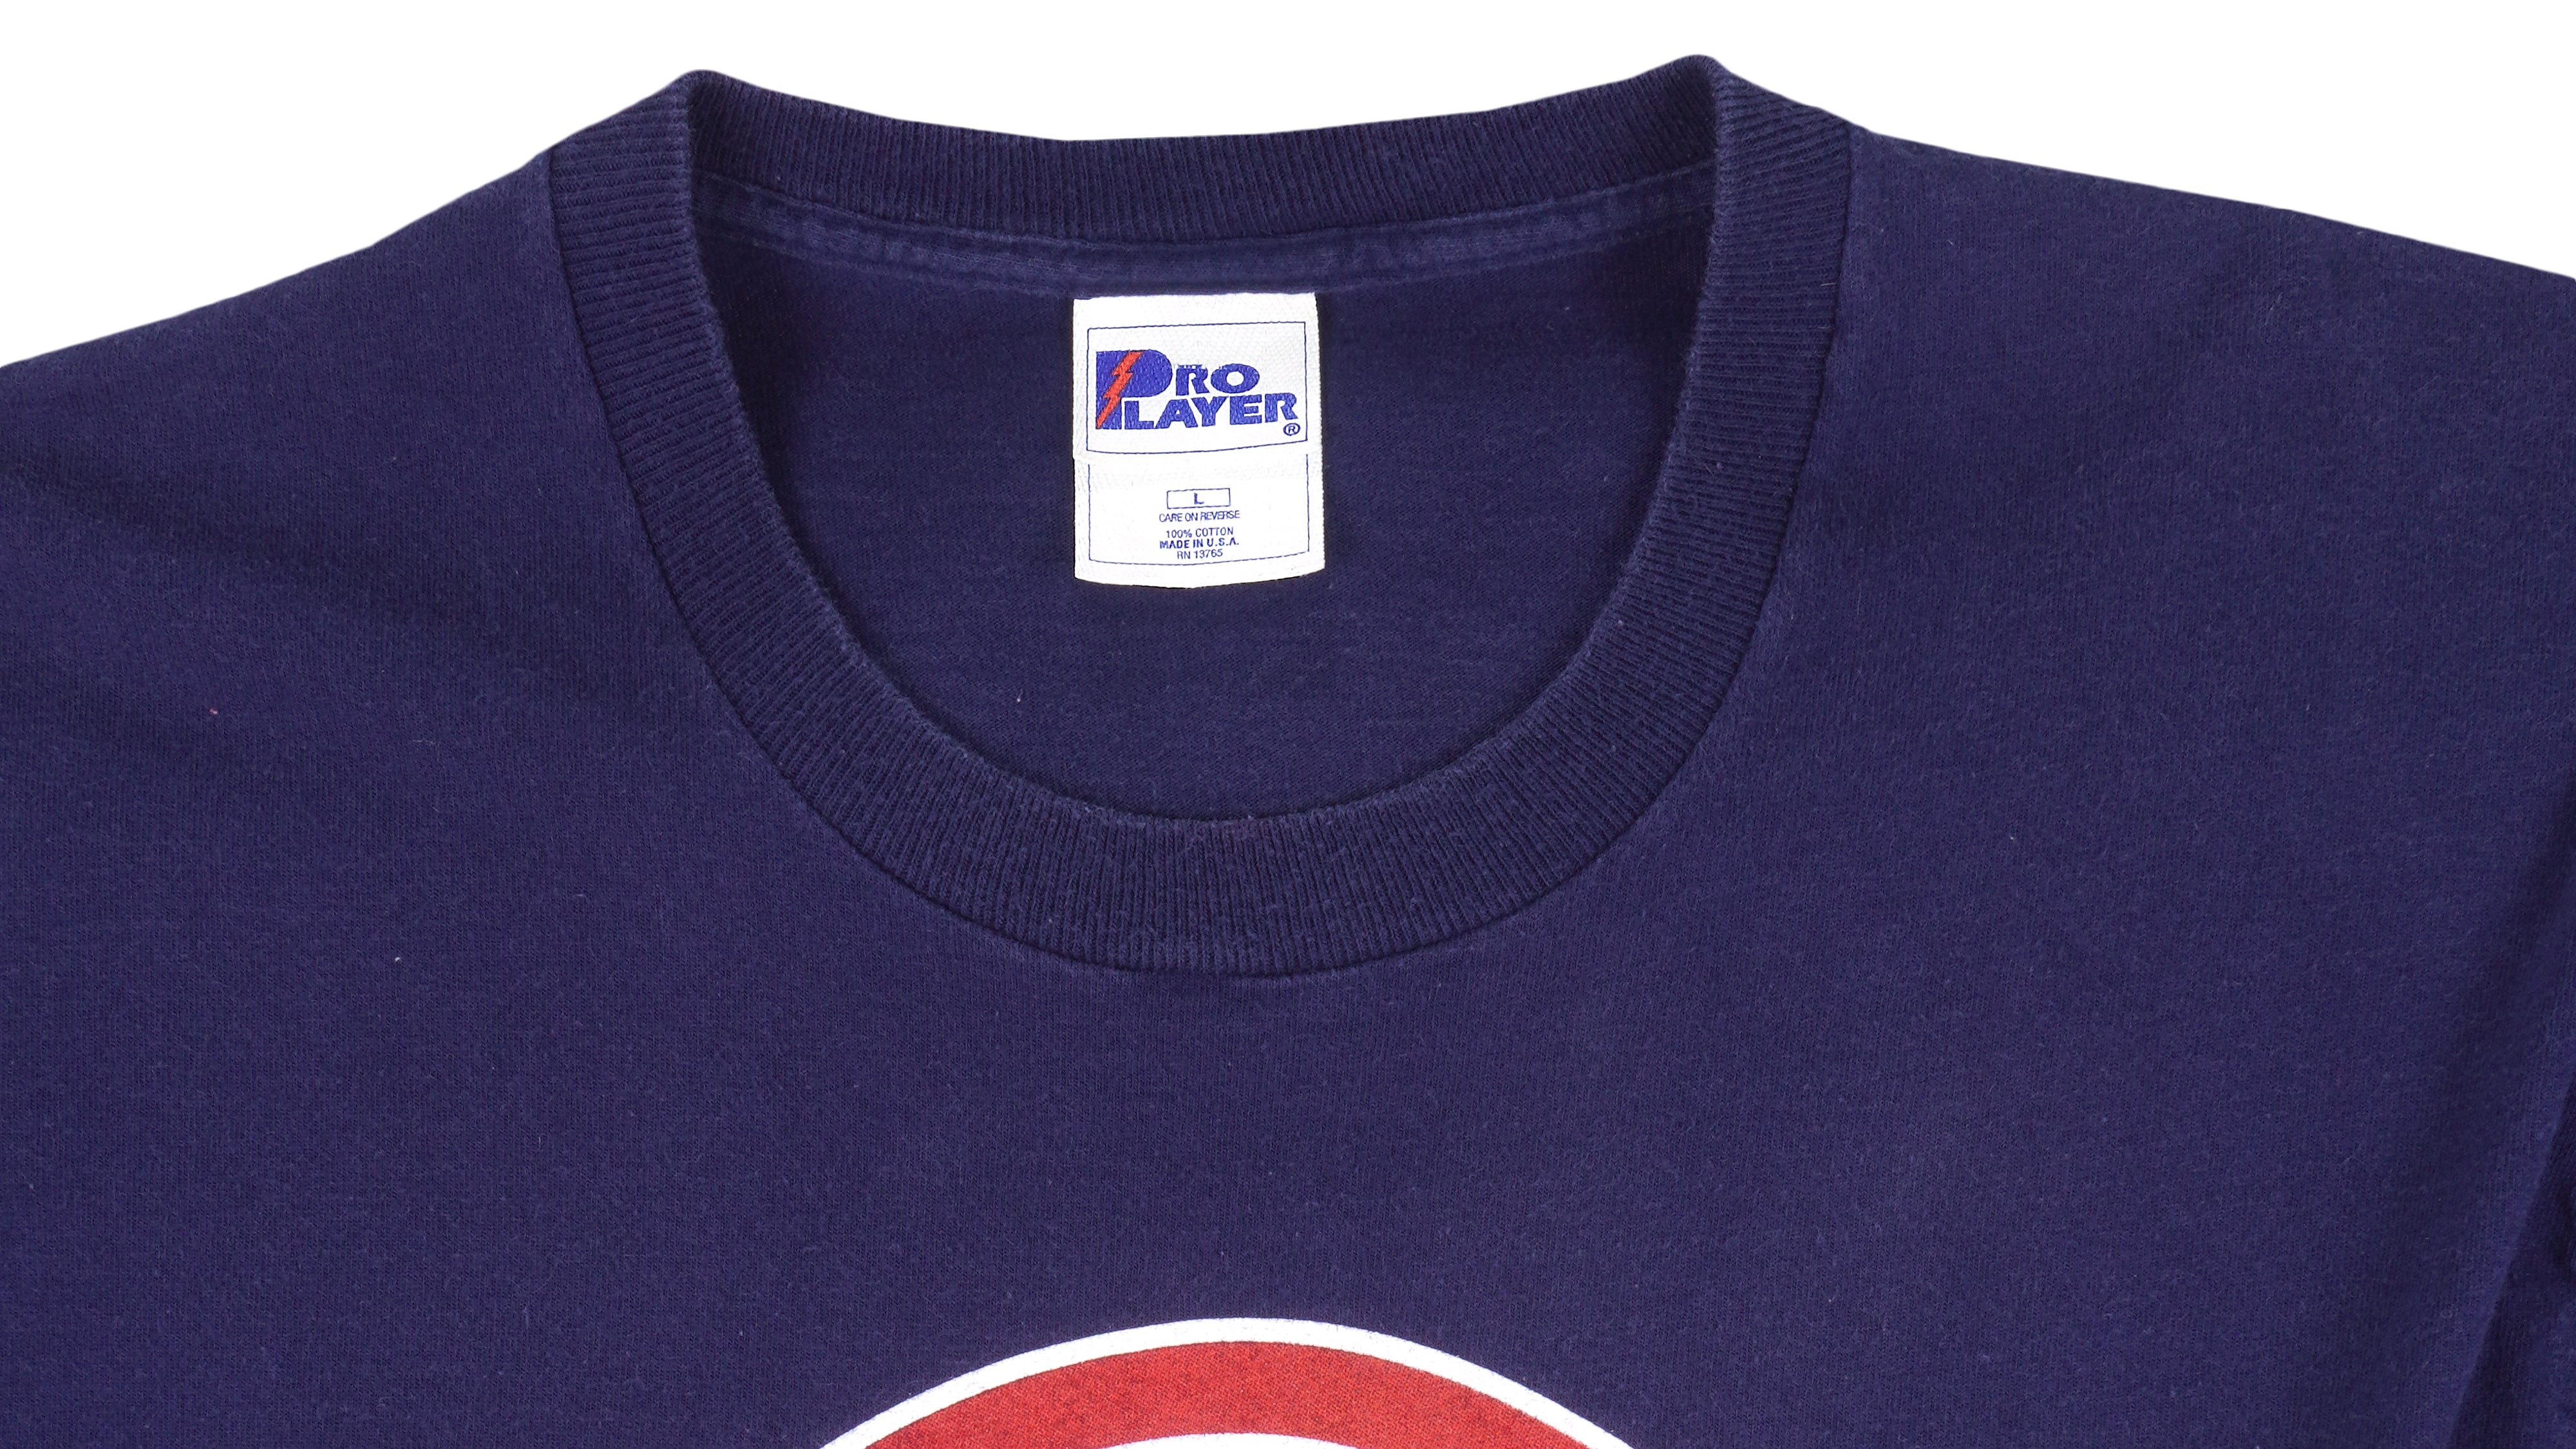 MLB T-Shirt - Boston Red Sox, Large